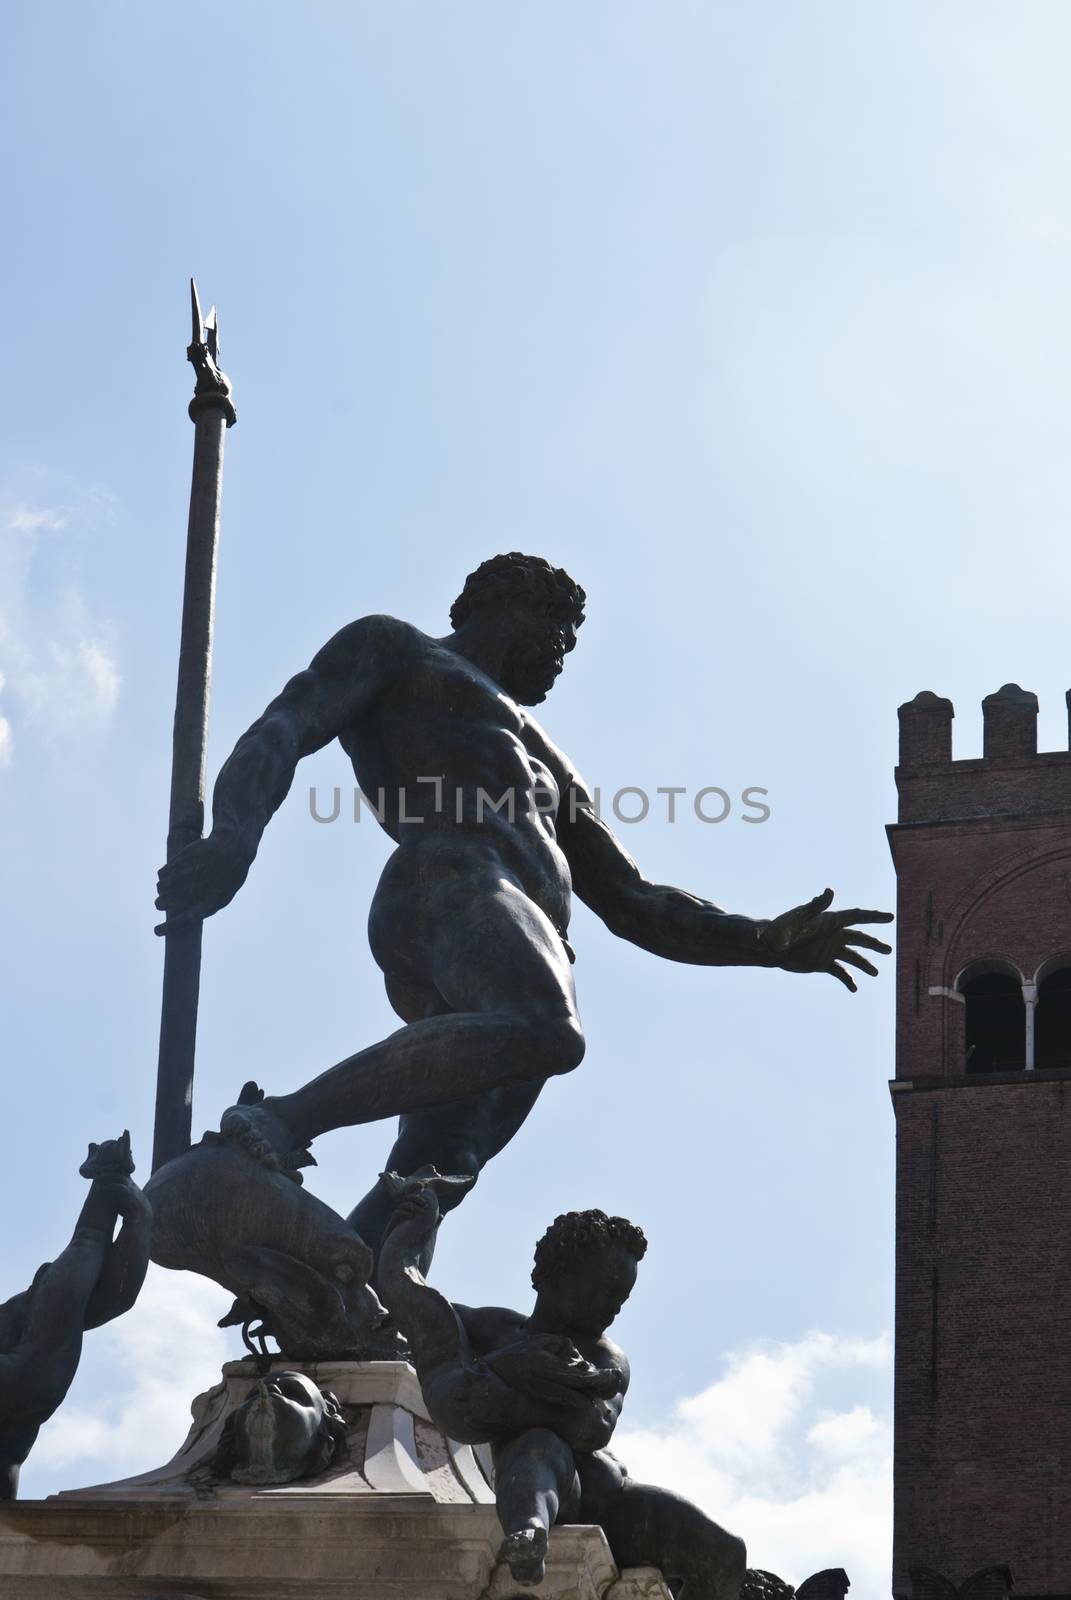 Fountain of Neptune in Bologna by gandolfocannatella